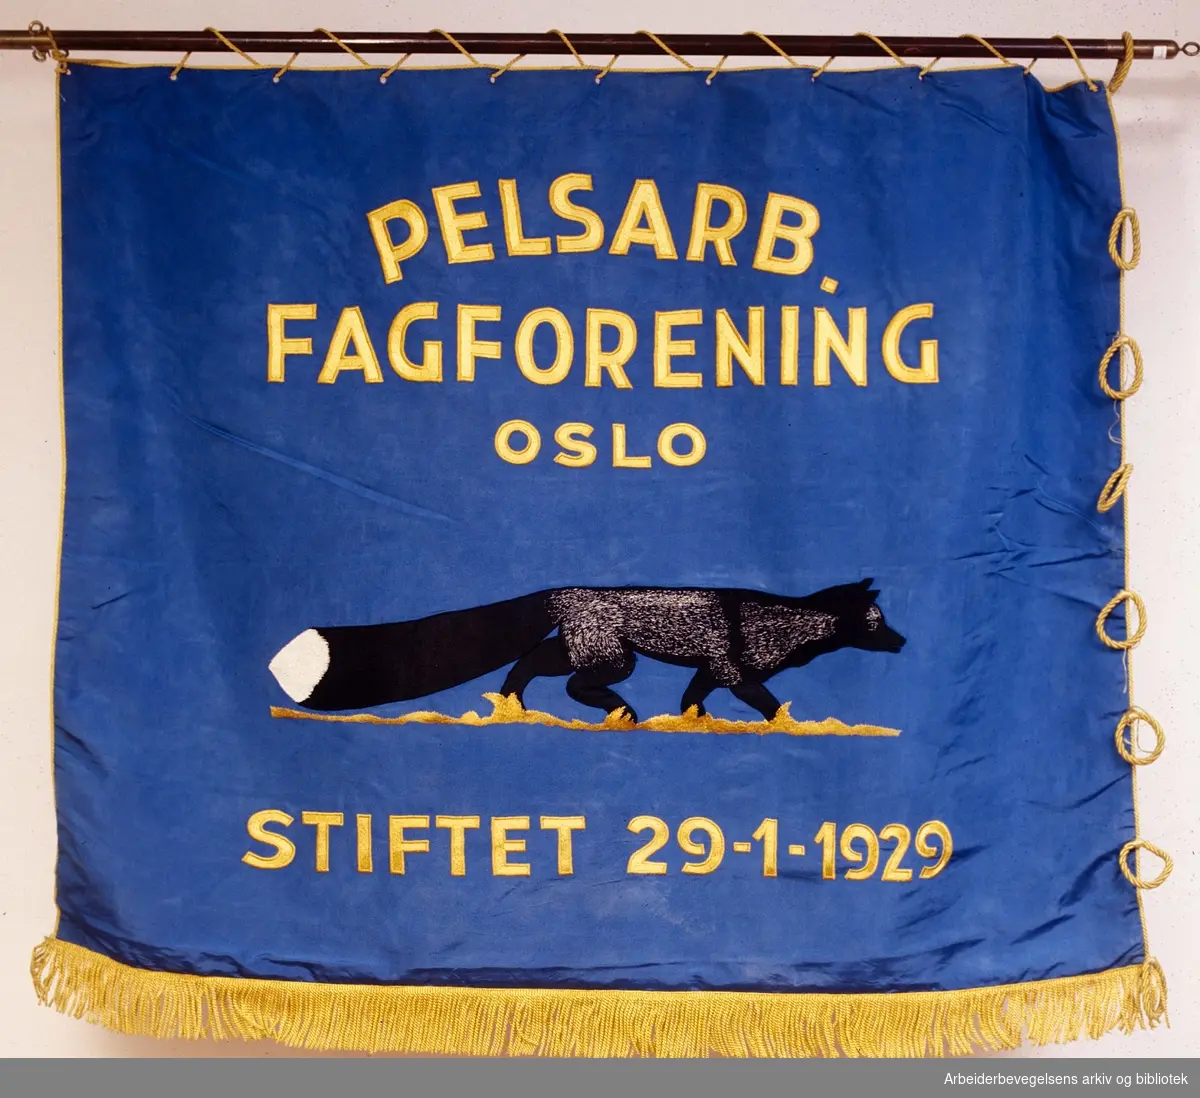 Pelsarbeidernes fagforening.Stiftet 29. januar 1929..Forside..Fanetekst: Pelsarb. Fagforening Oslo. Stiftet 29-1-1929